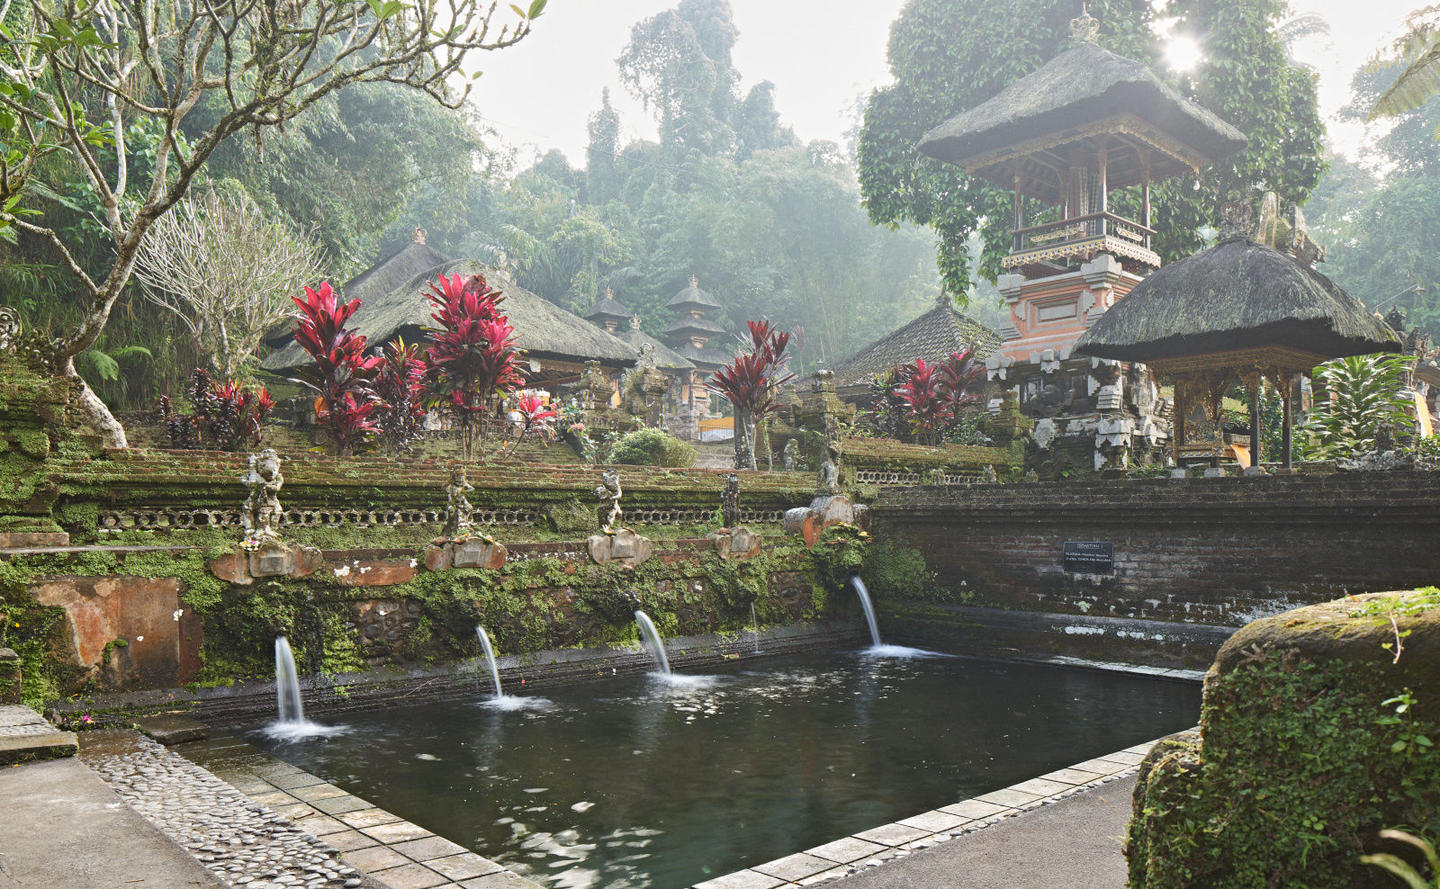 Amandari, Indonesia - Experience, Melukat water blessing